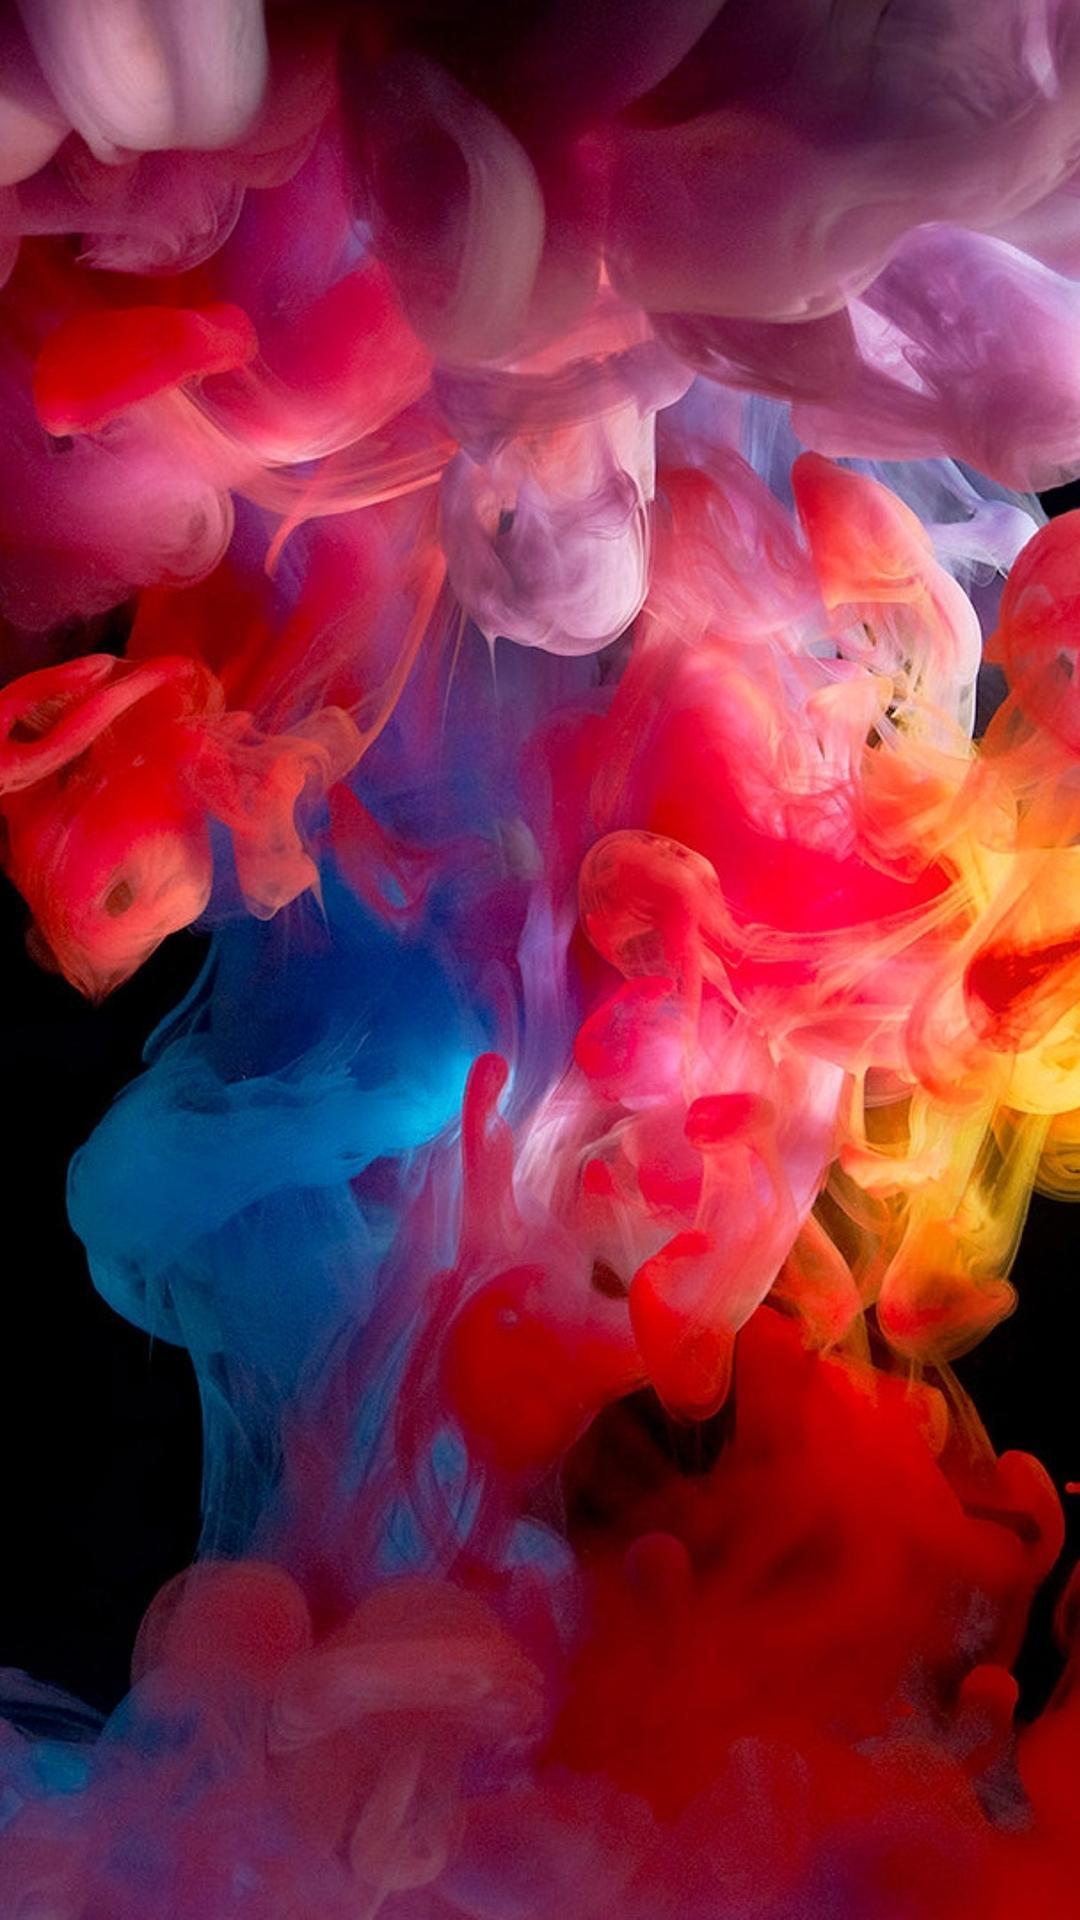 1080 x 1920 · jpeg - Many colorful smoke - Abstract wallpaper Wallpaper Download 1080x1920